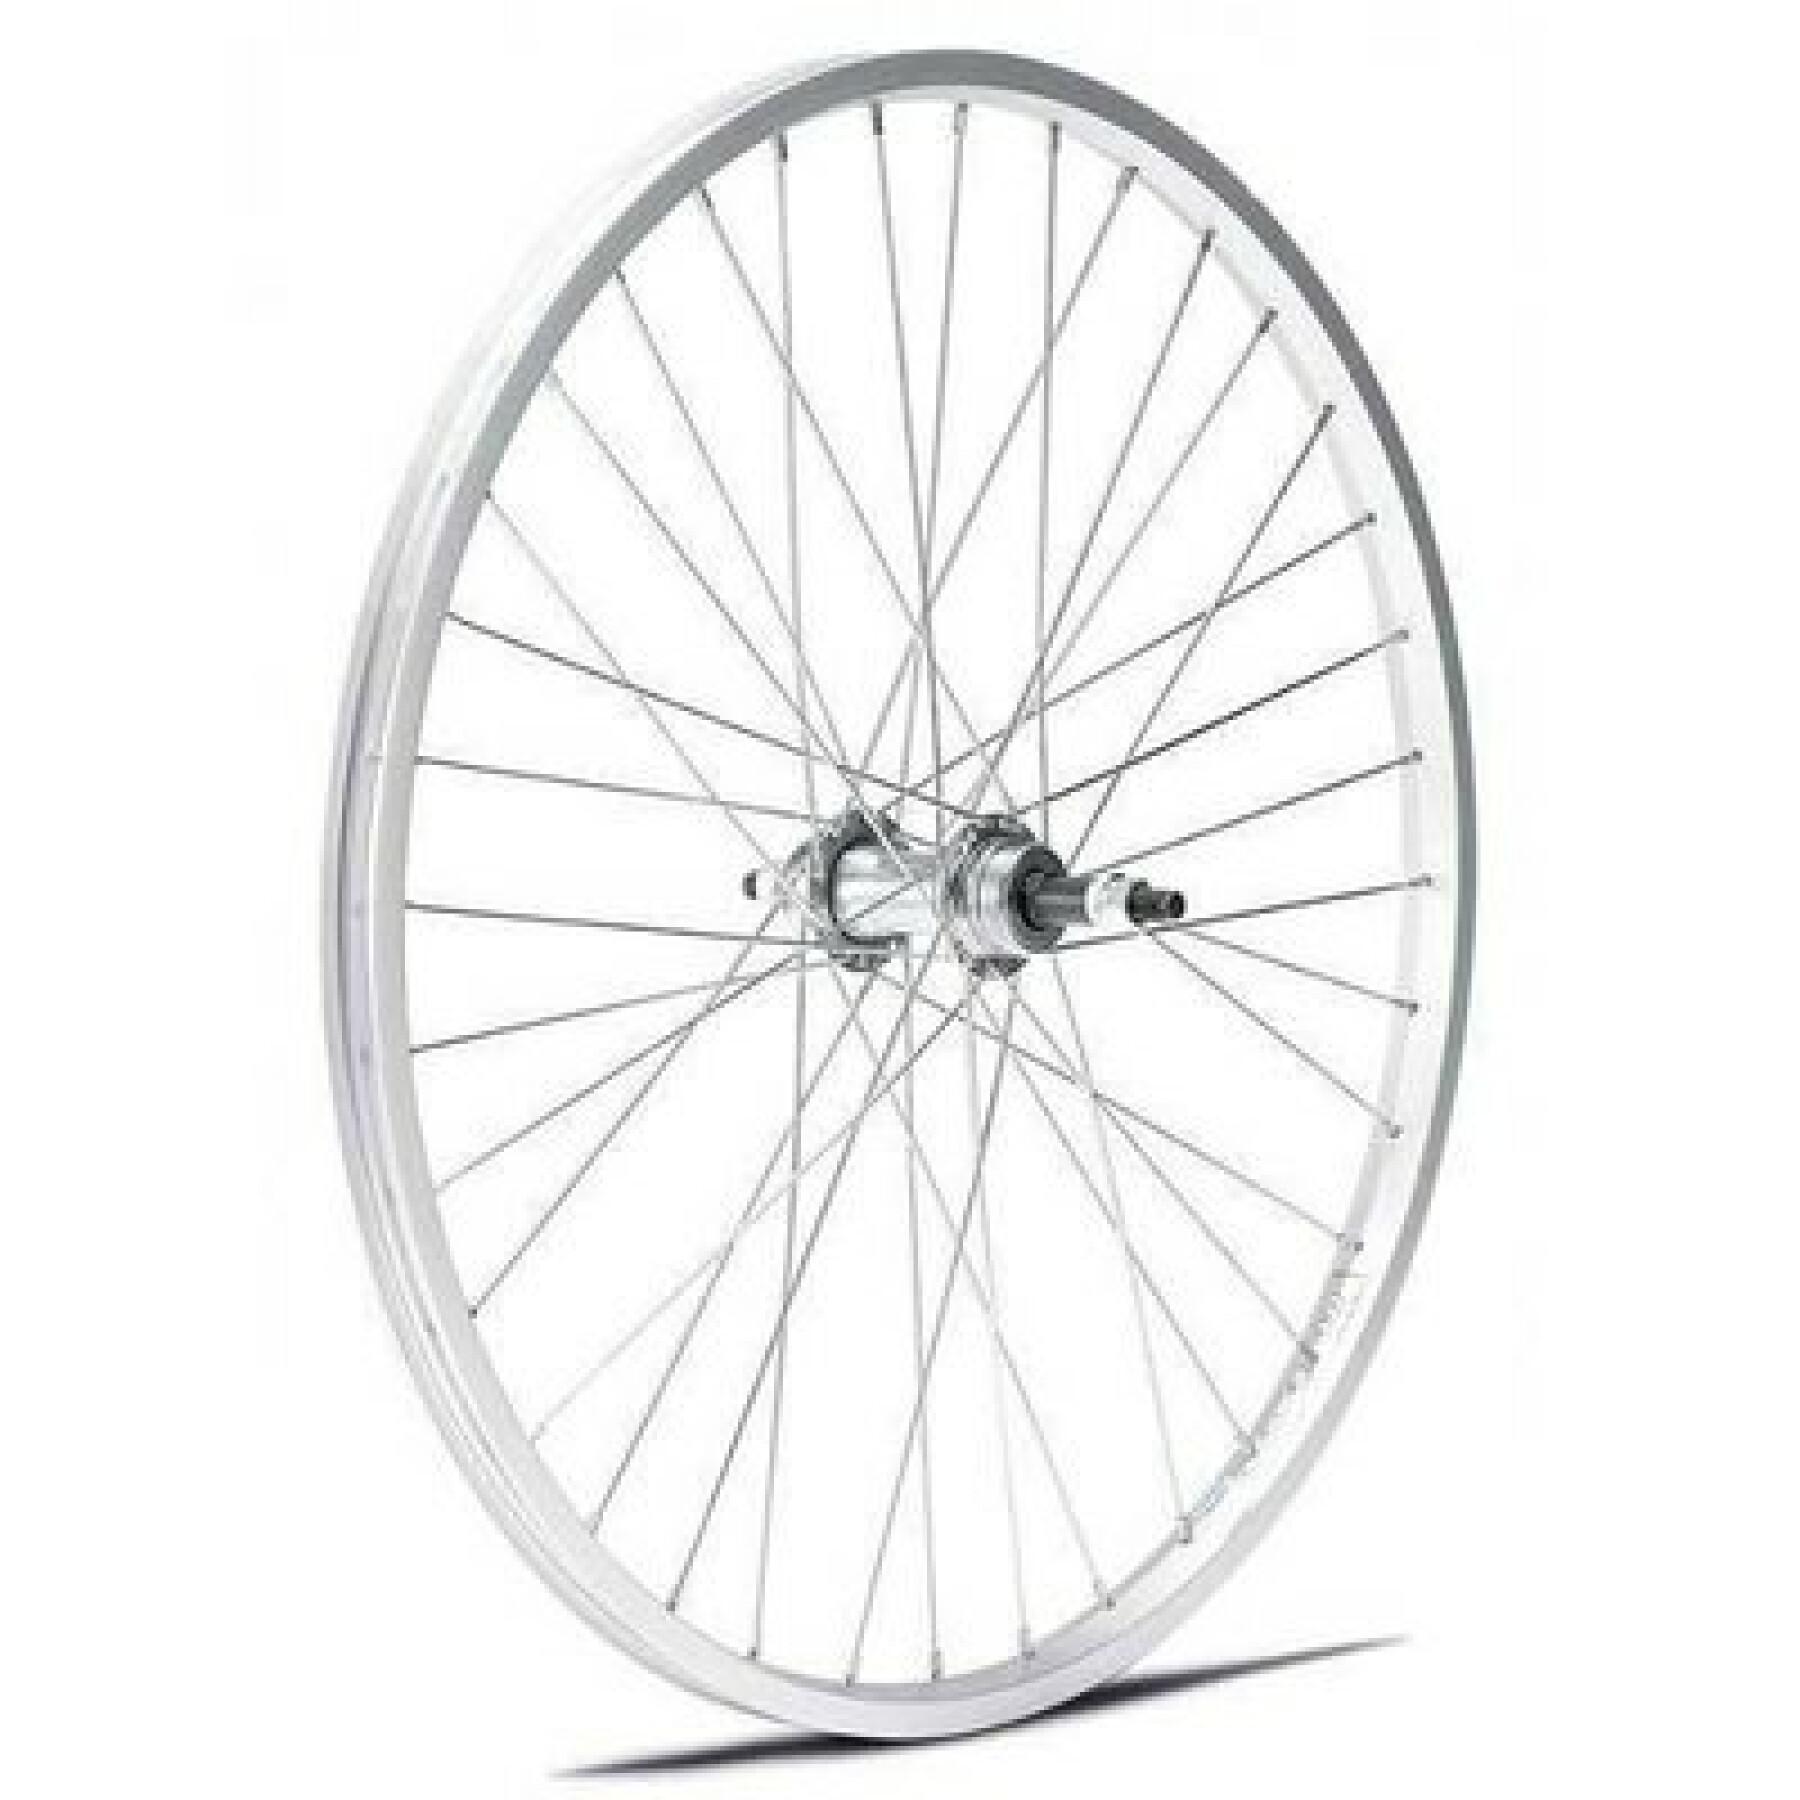 Rear mountain bike wheel with 500 aluminum spokes Gurpil